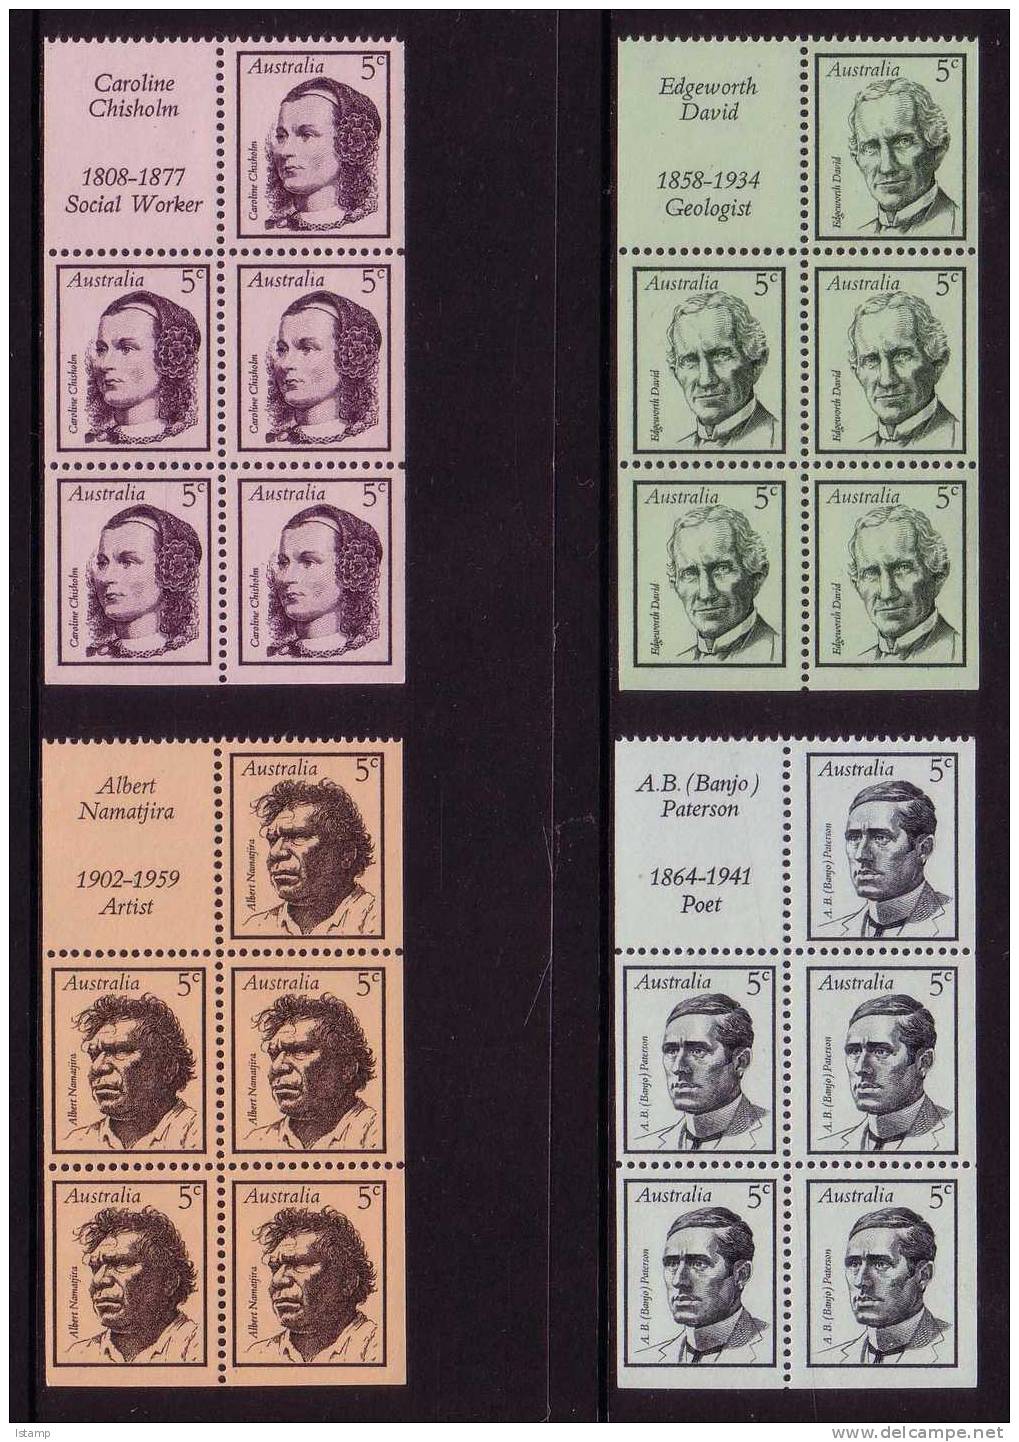 ⭕1968 - Australia FAMOUS Australians (1st Series) Booklet Pane - 4 Blocks Stamps MNH Including Tabs⭕ - Mint Stamps